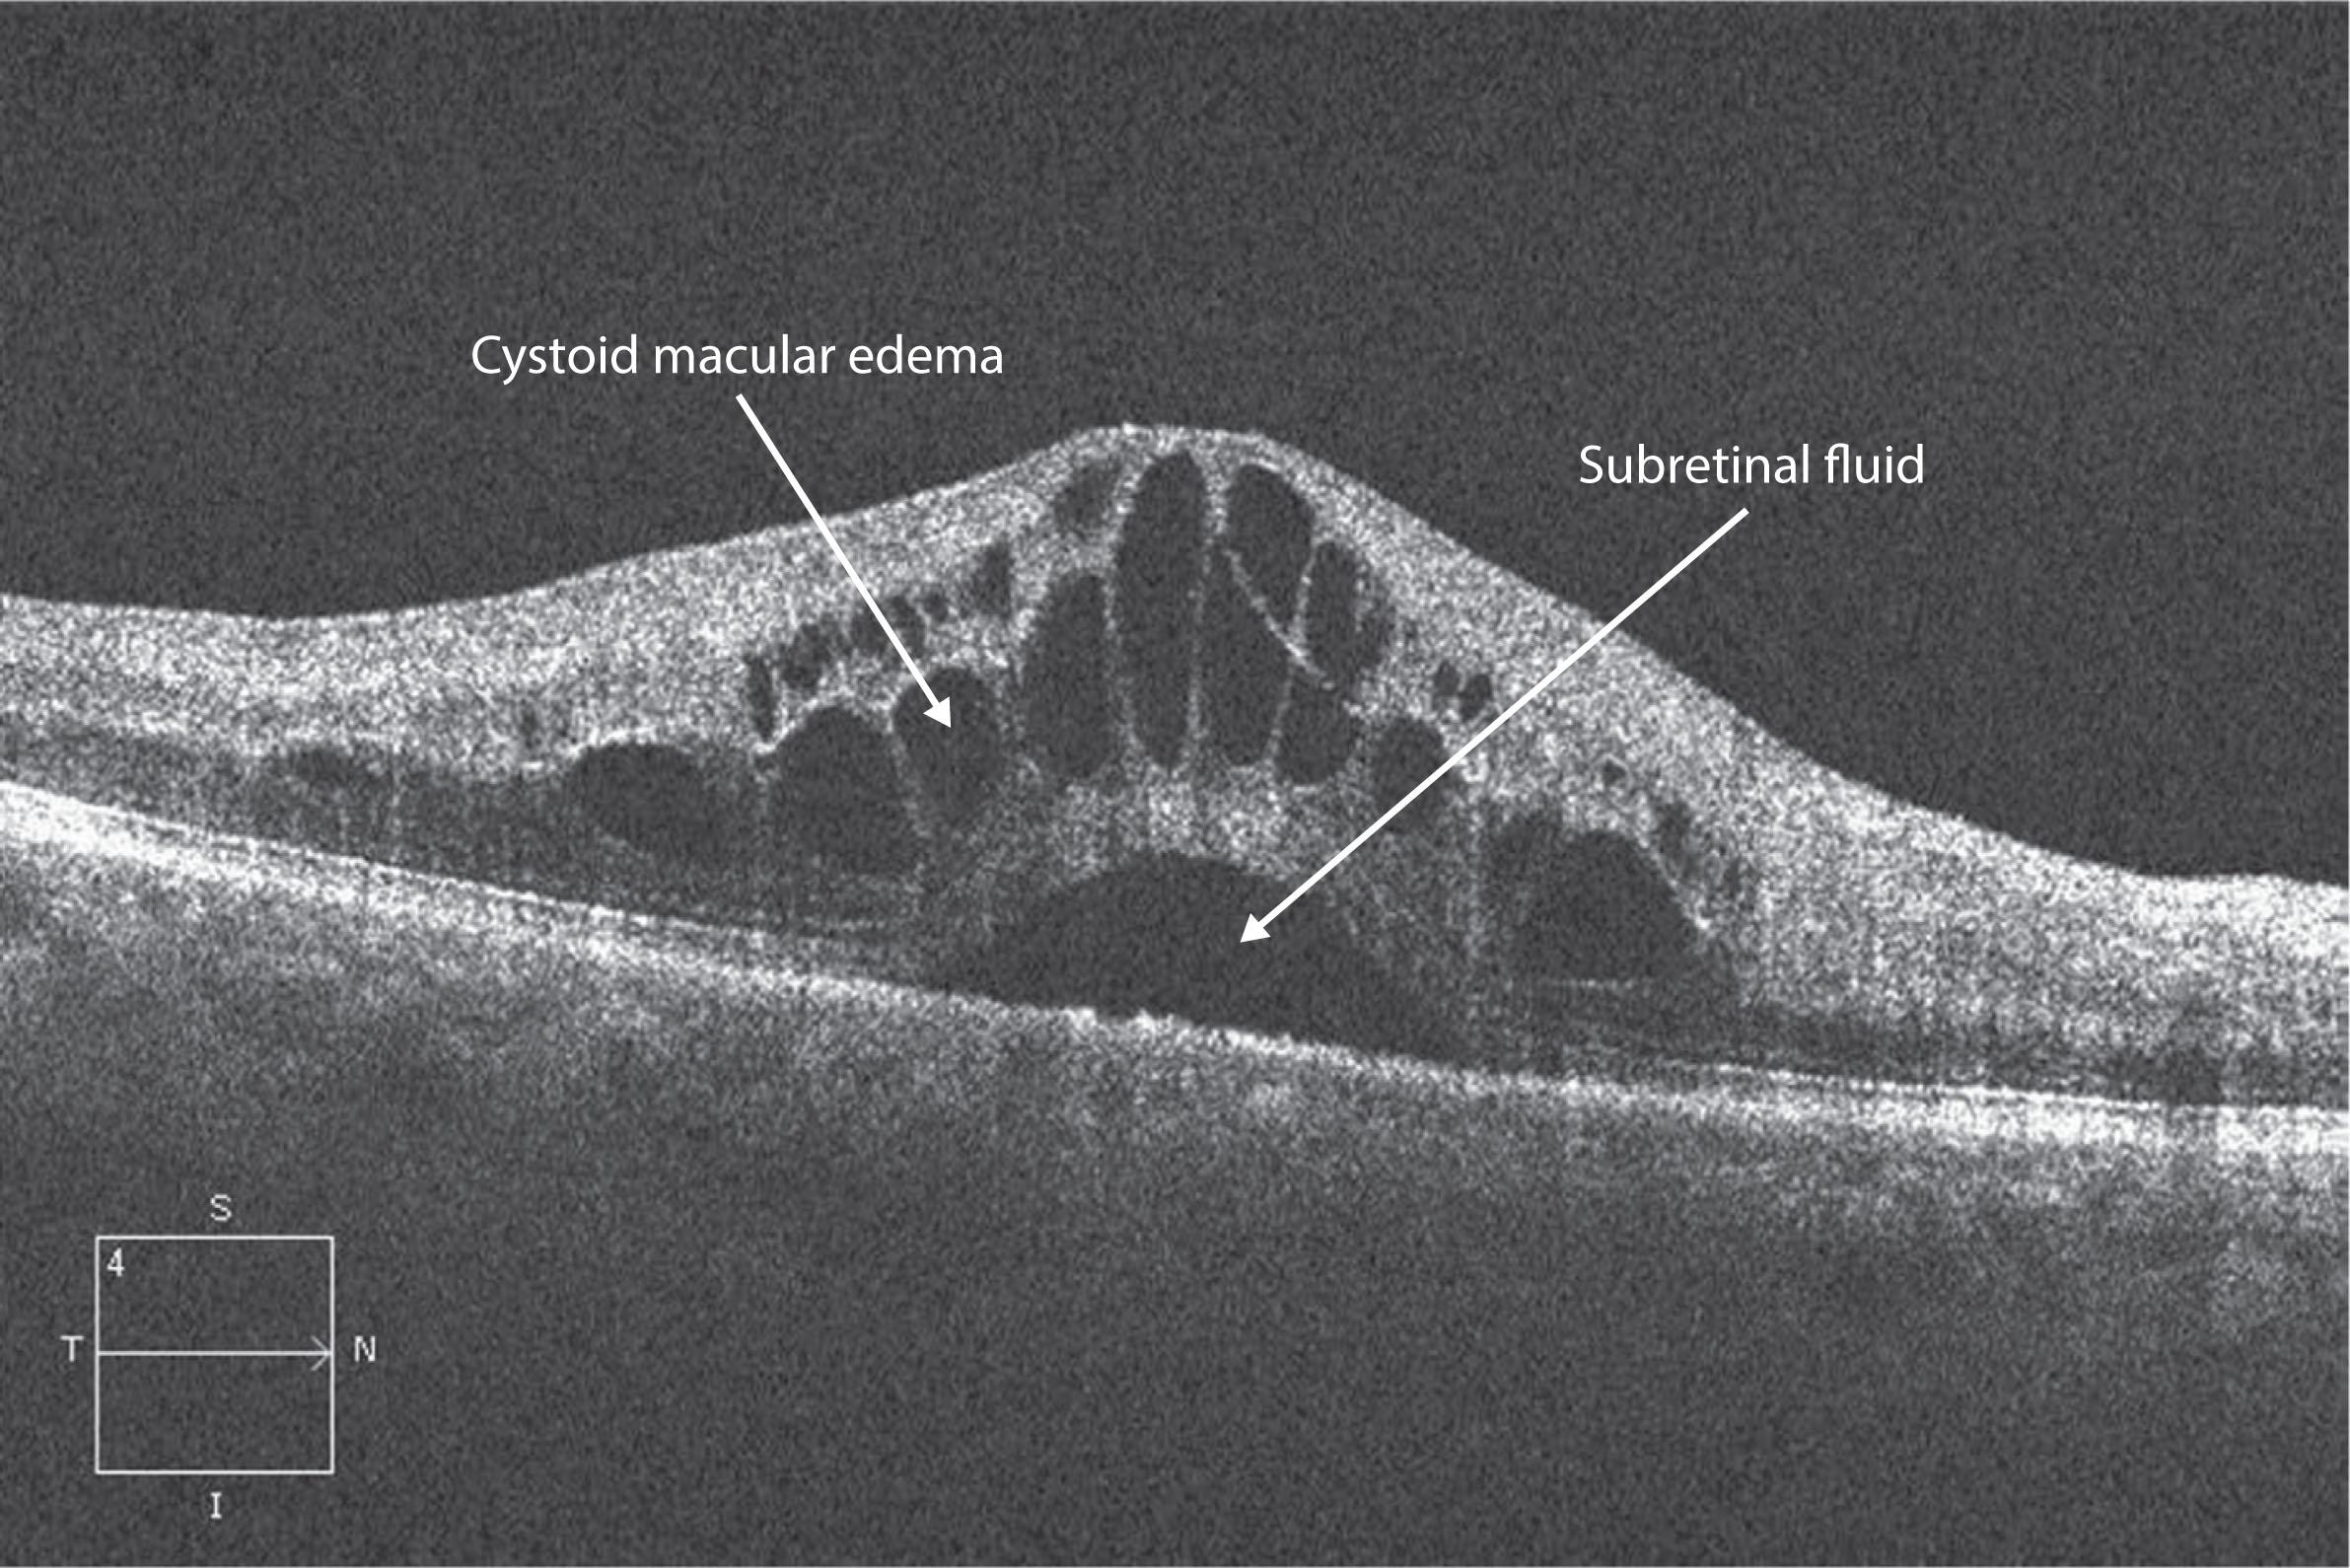 Figure 4.1.4, Cystoid changes in retina.